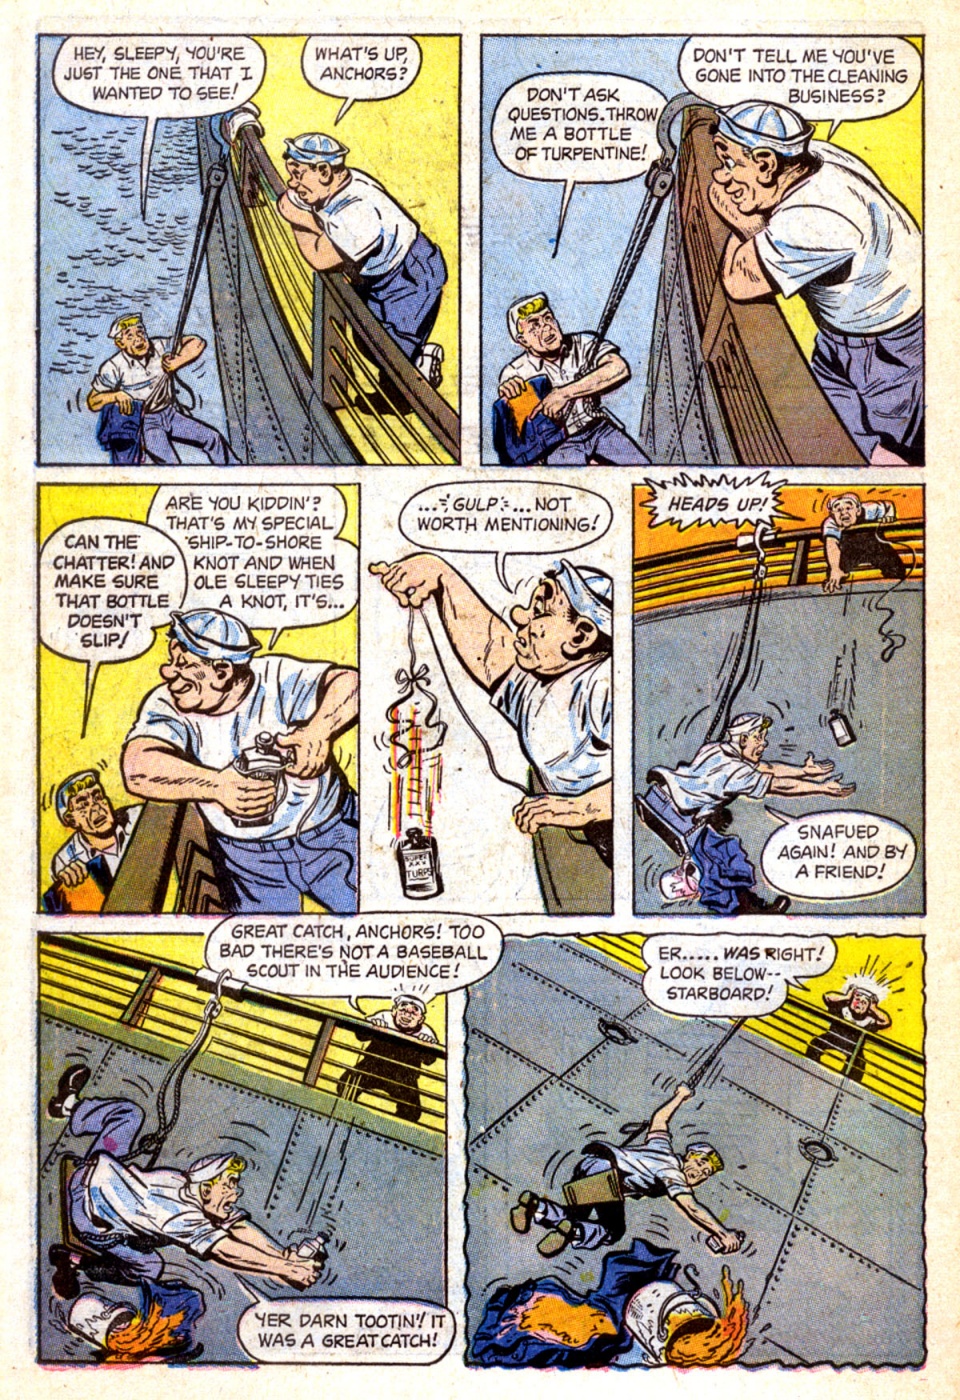 Anchors the Salt Water Daffy - Comics (c) (32)